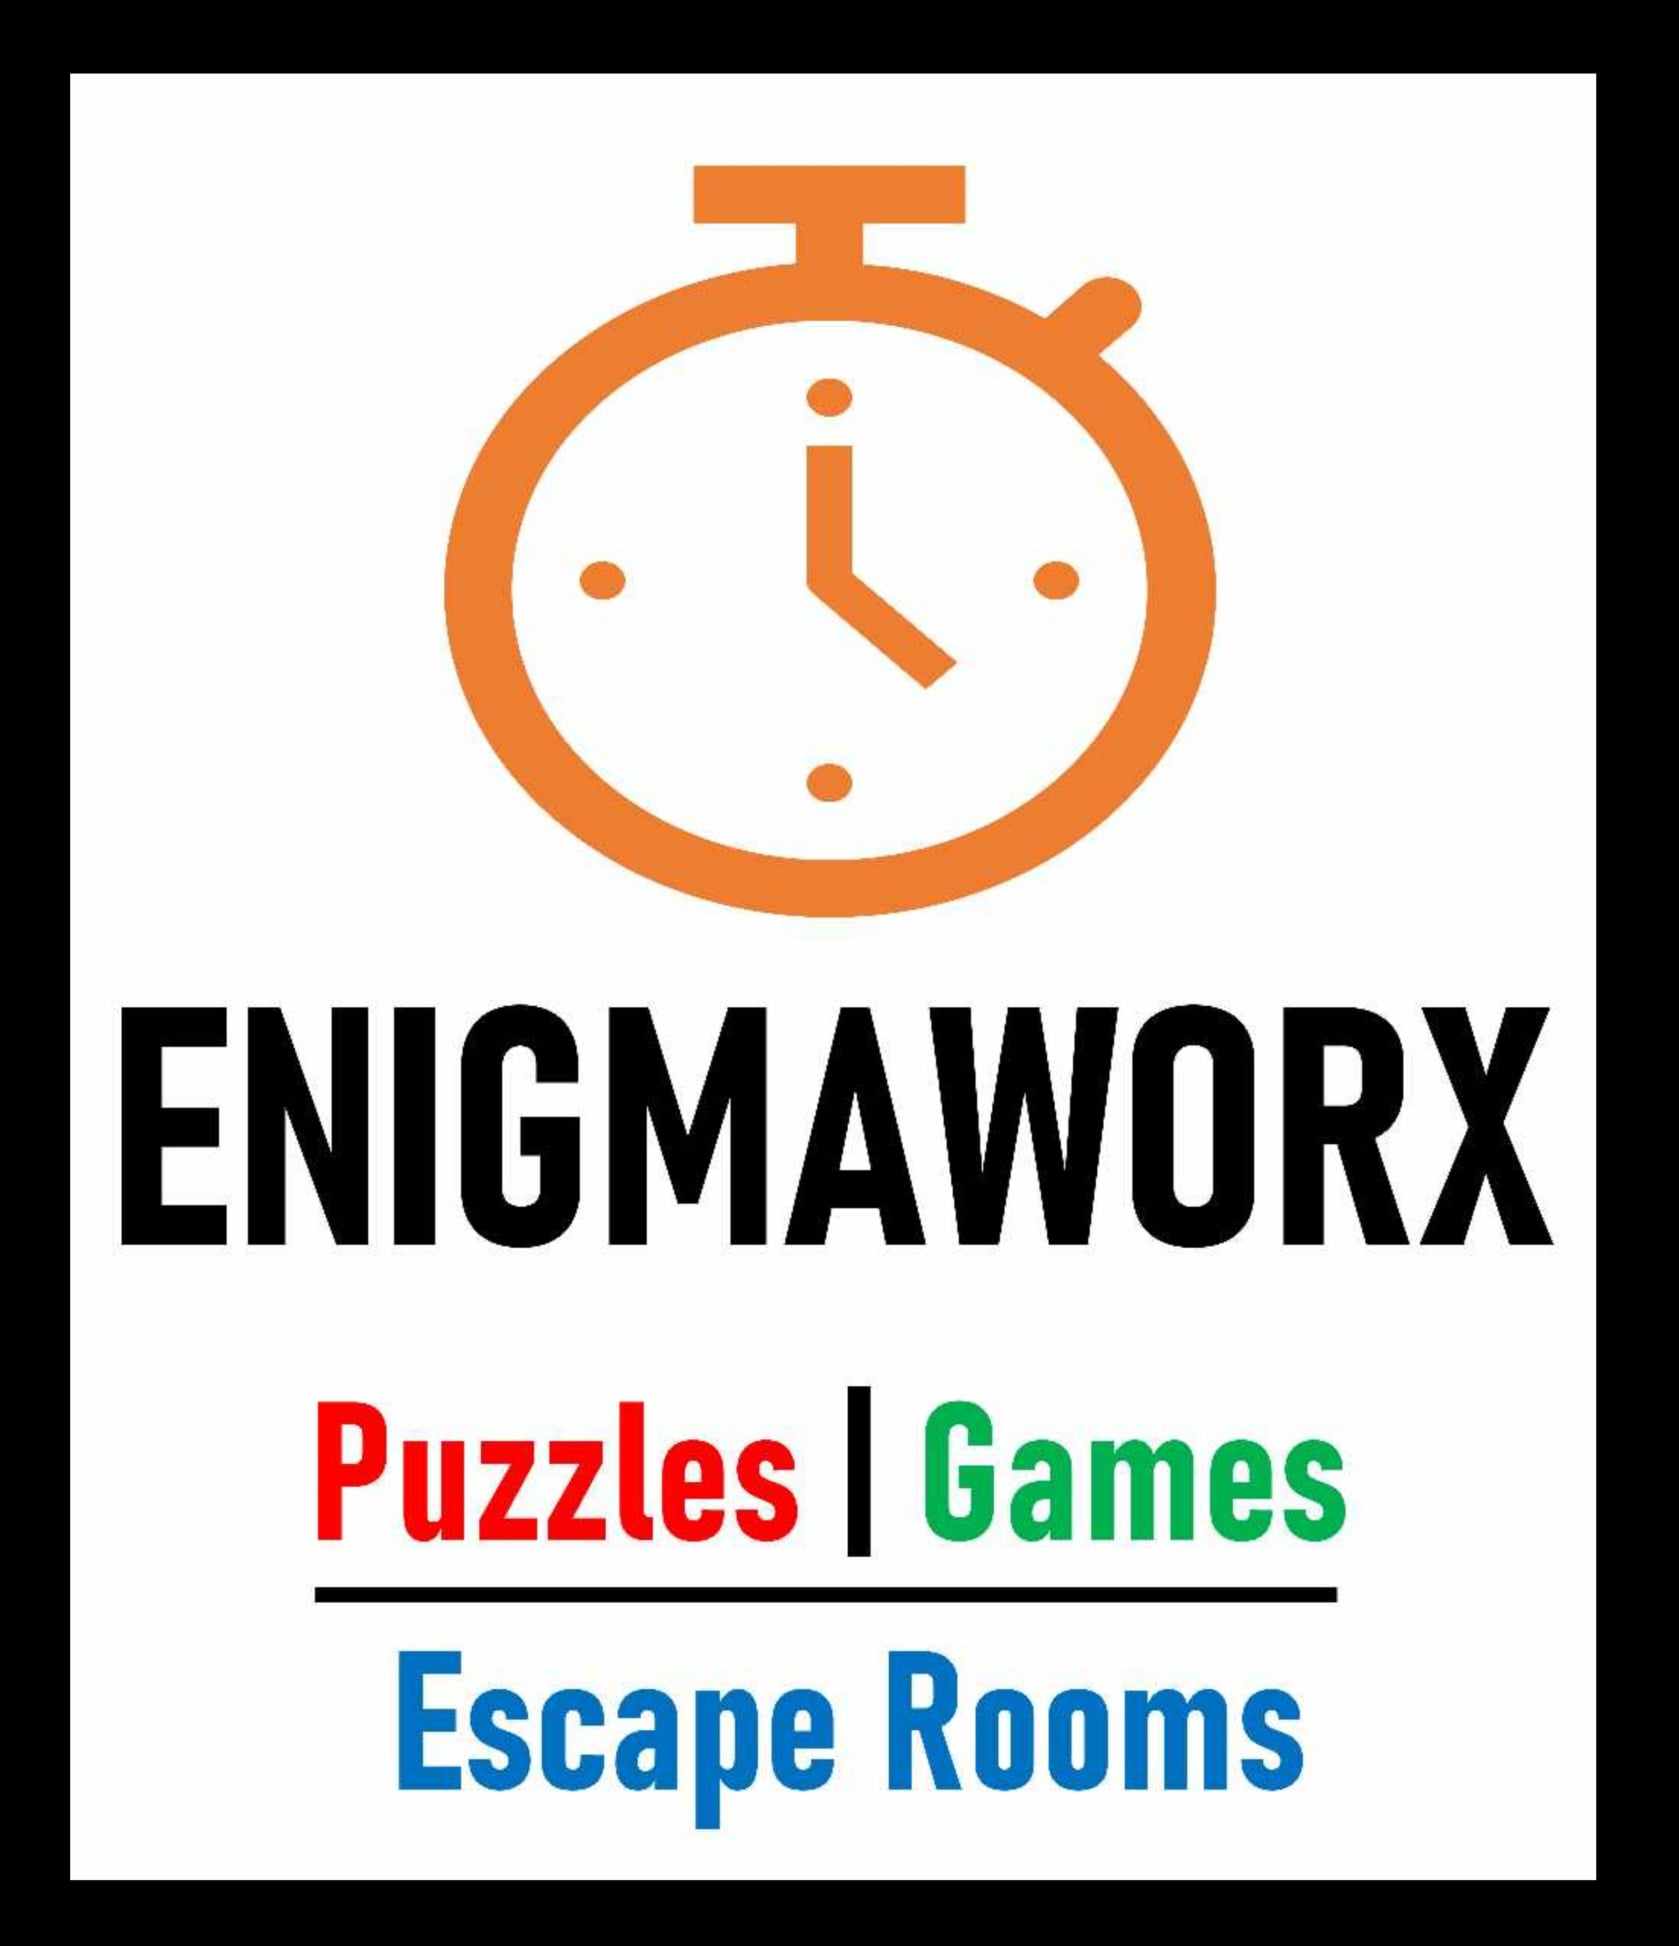 Enigmaworx logo